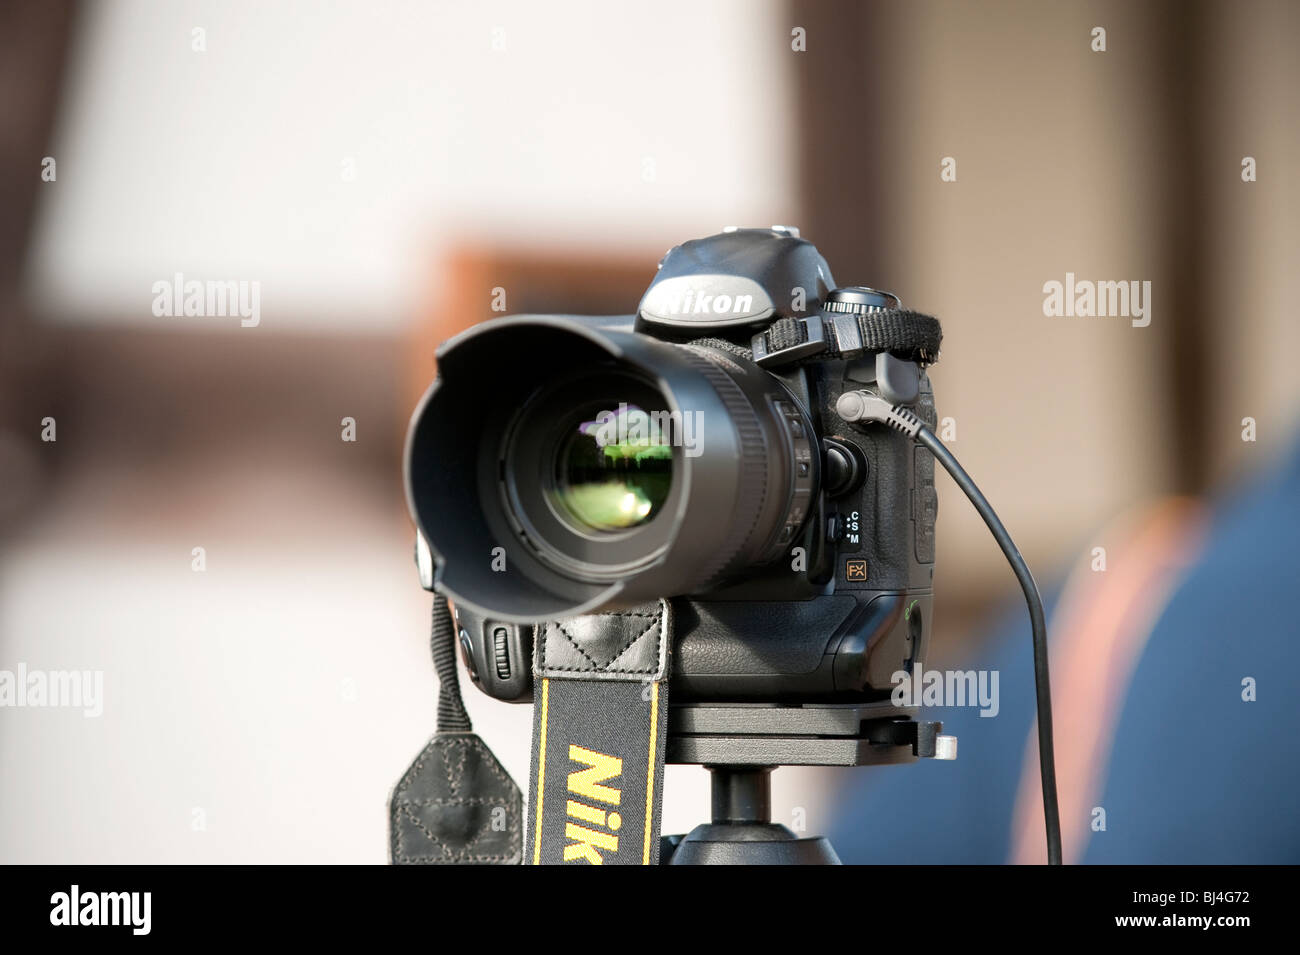 Nikon camera tripod hi-res stock photography and images - Alamy